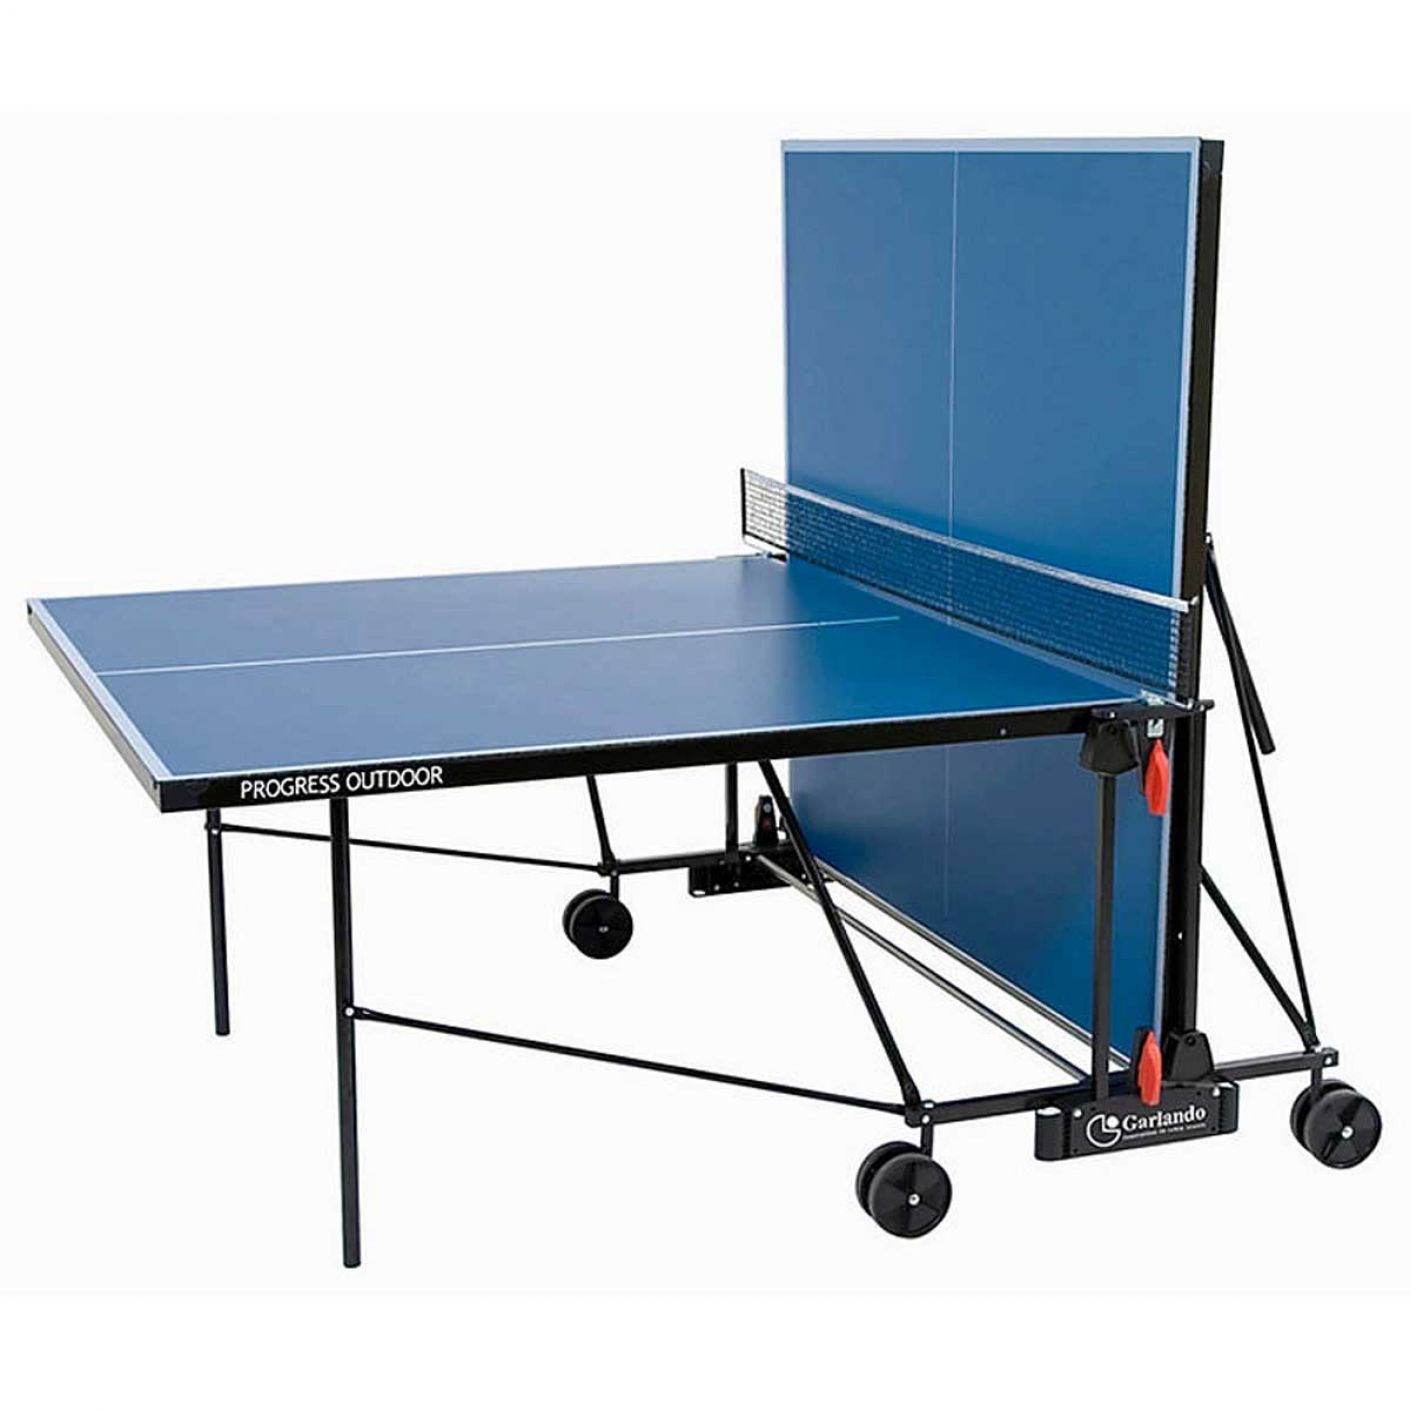 Garlando  Tavolo da Ping Pong Progress Outdoor Blu con ruote  per esterno